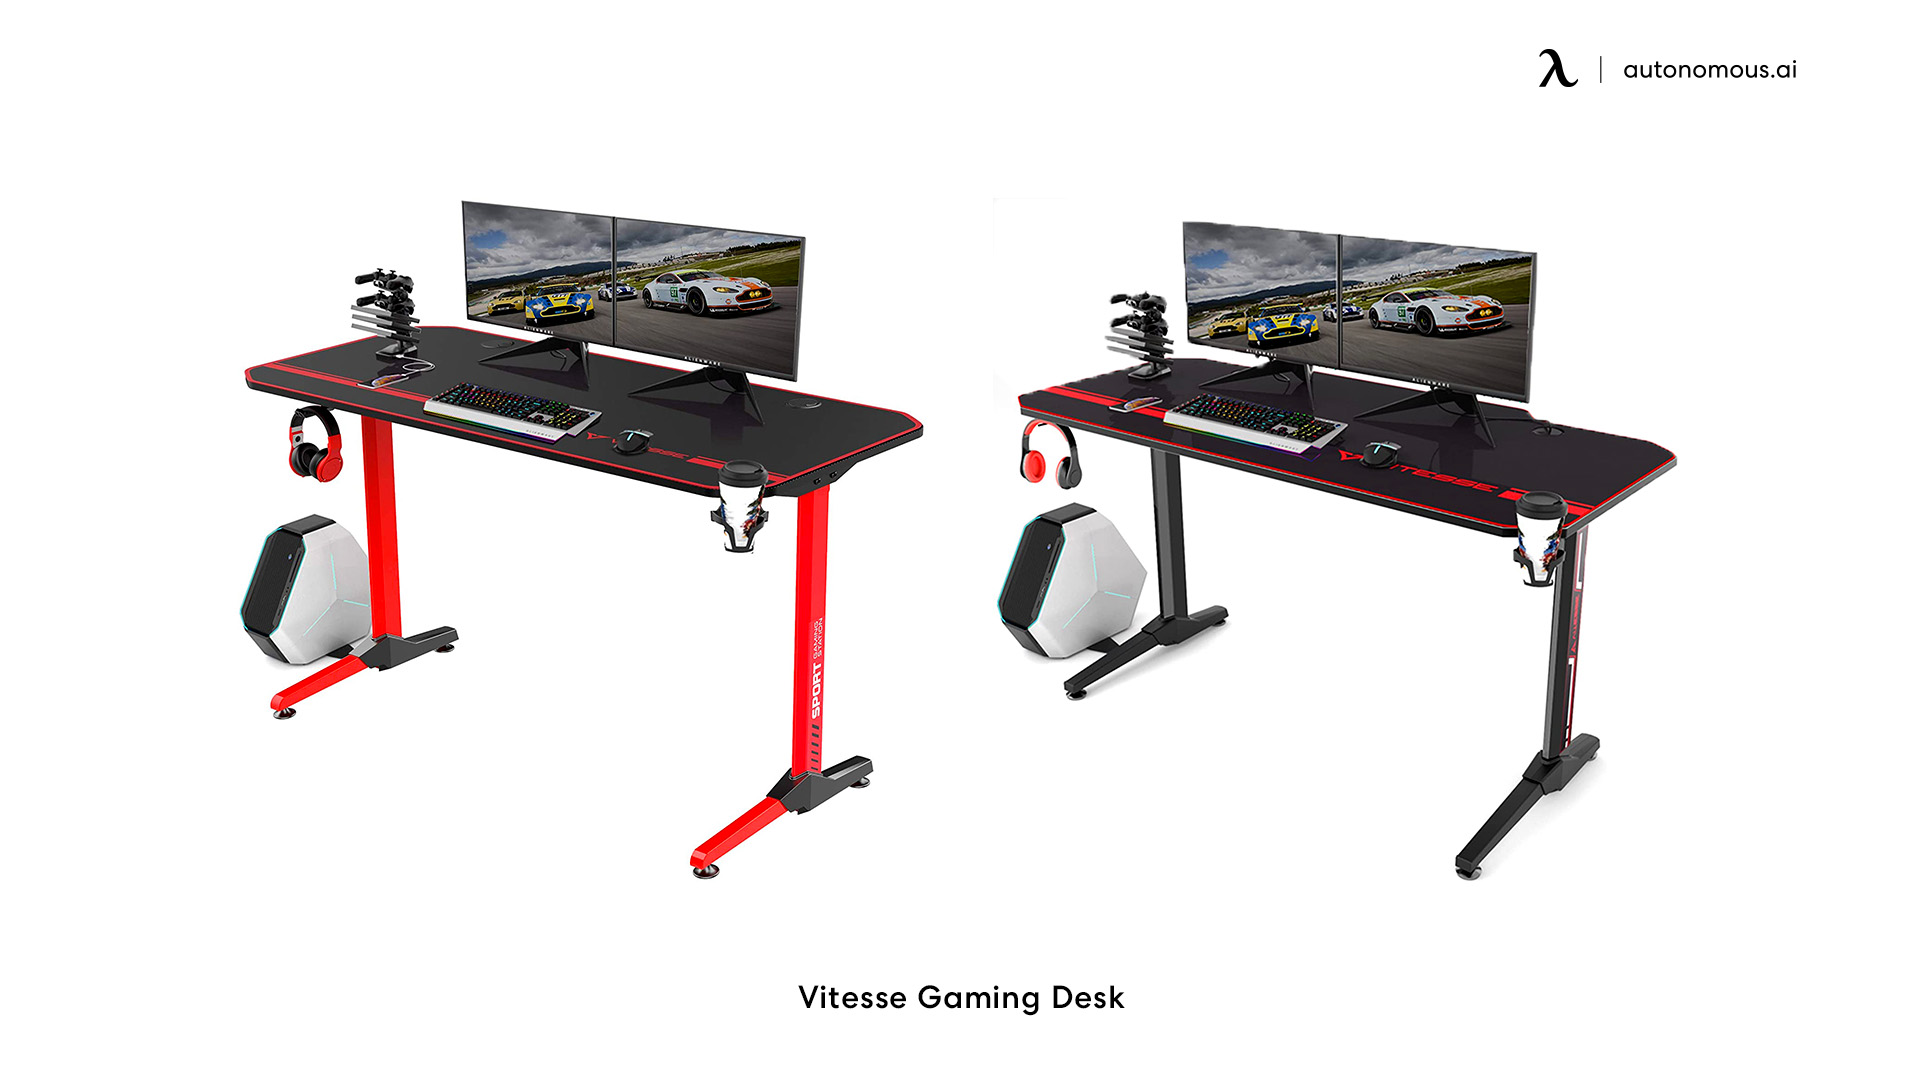 Vitesse compact gaming desk